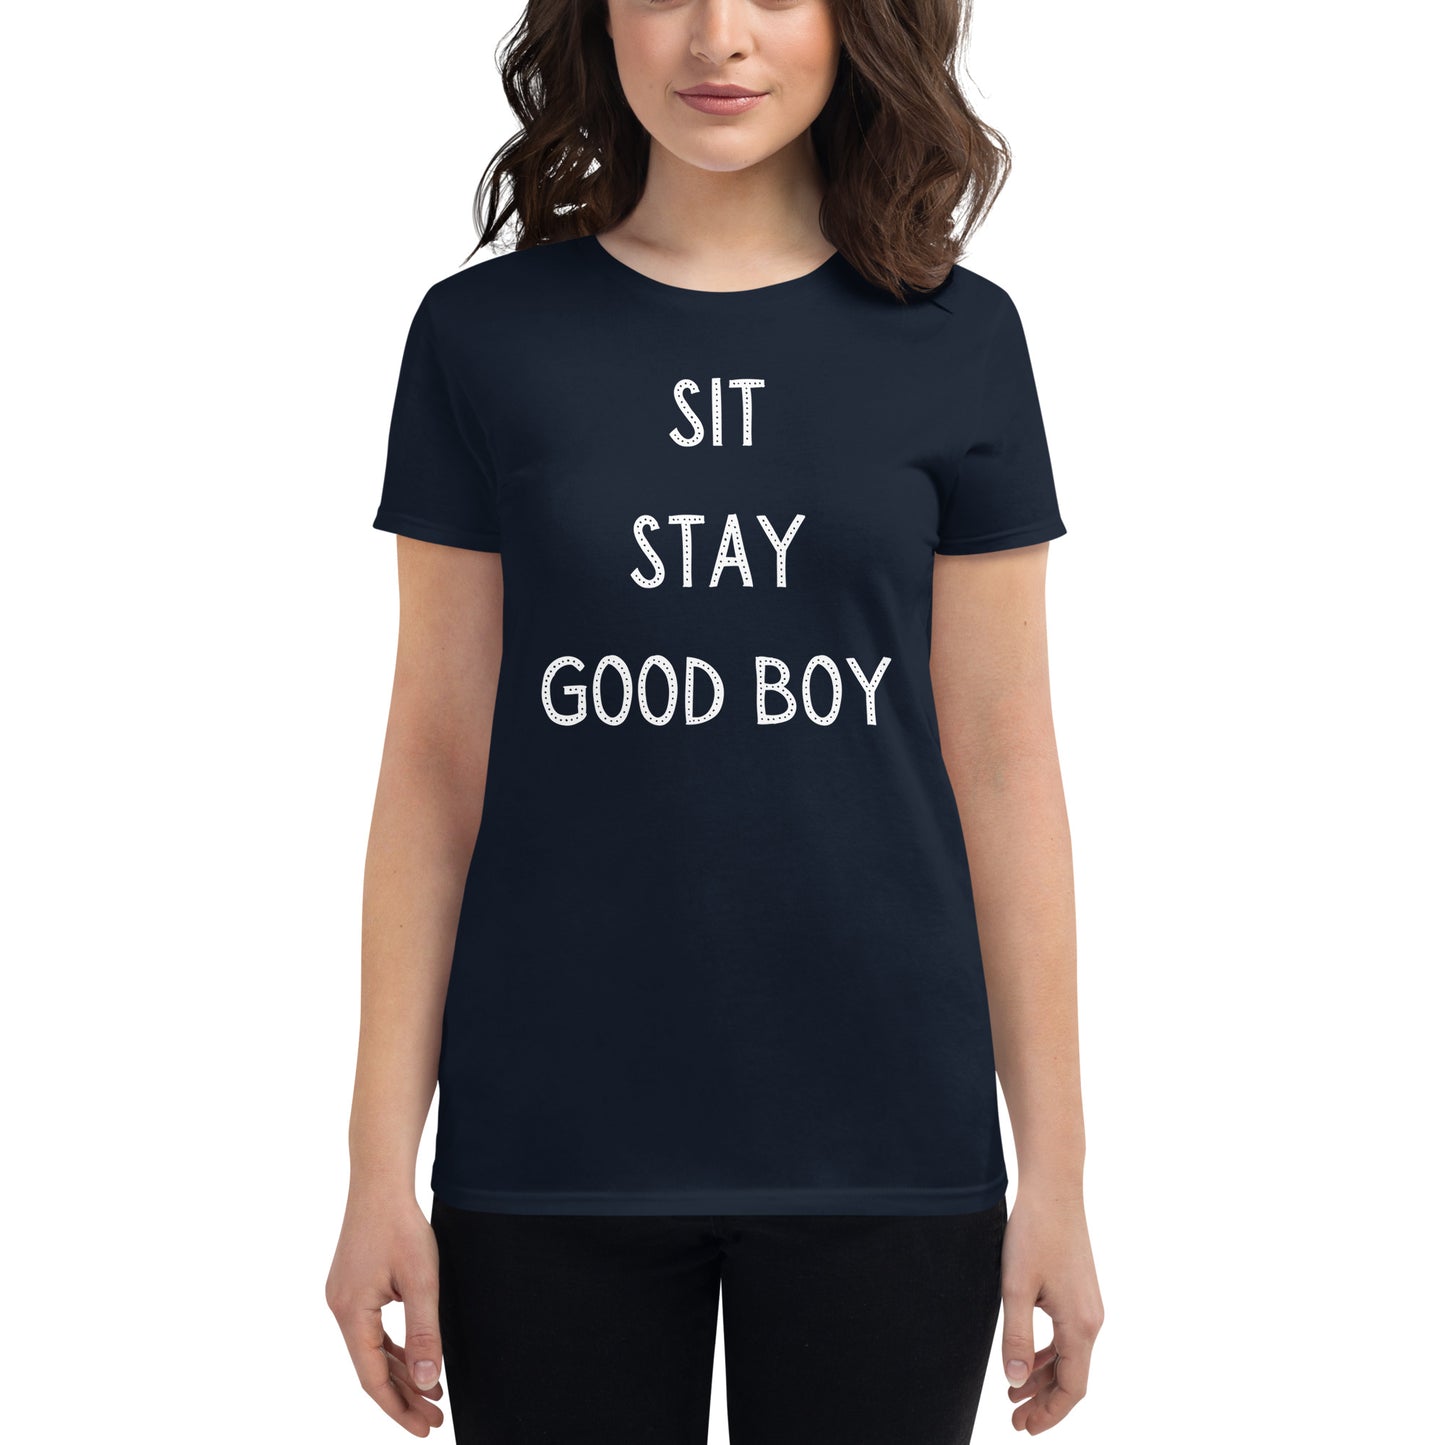 Sit Stay Good Boy Women's short sleeve t-shirt